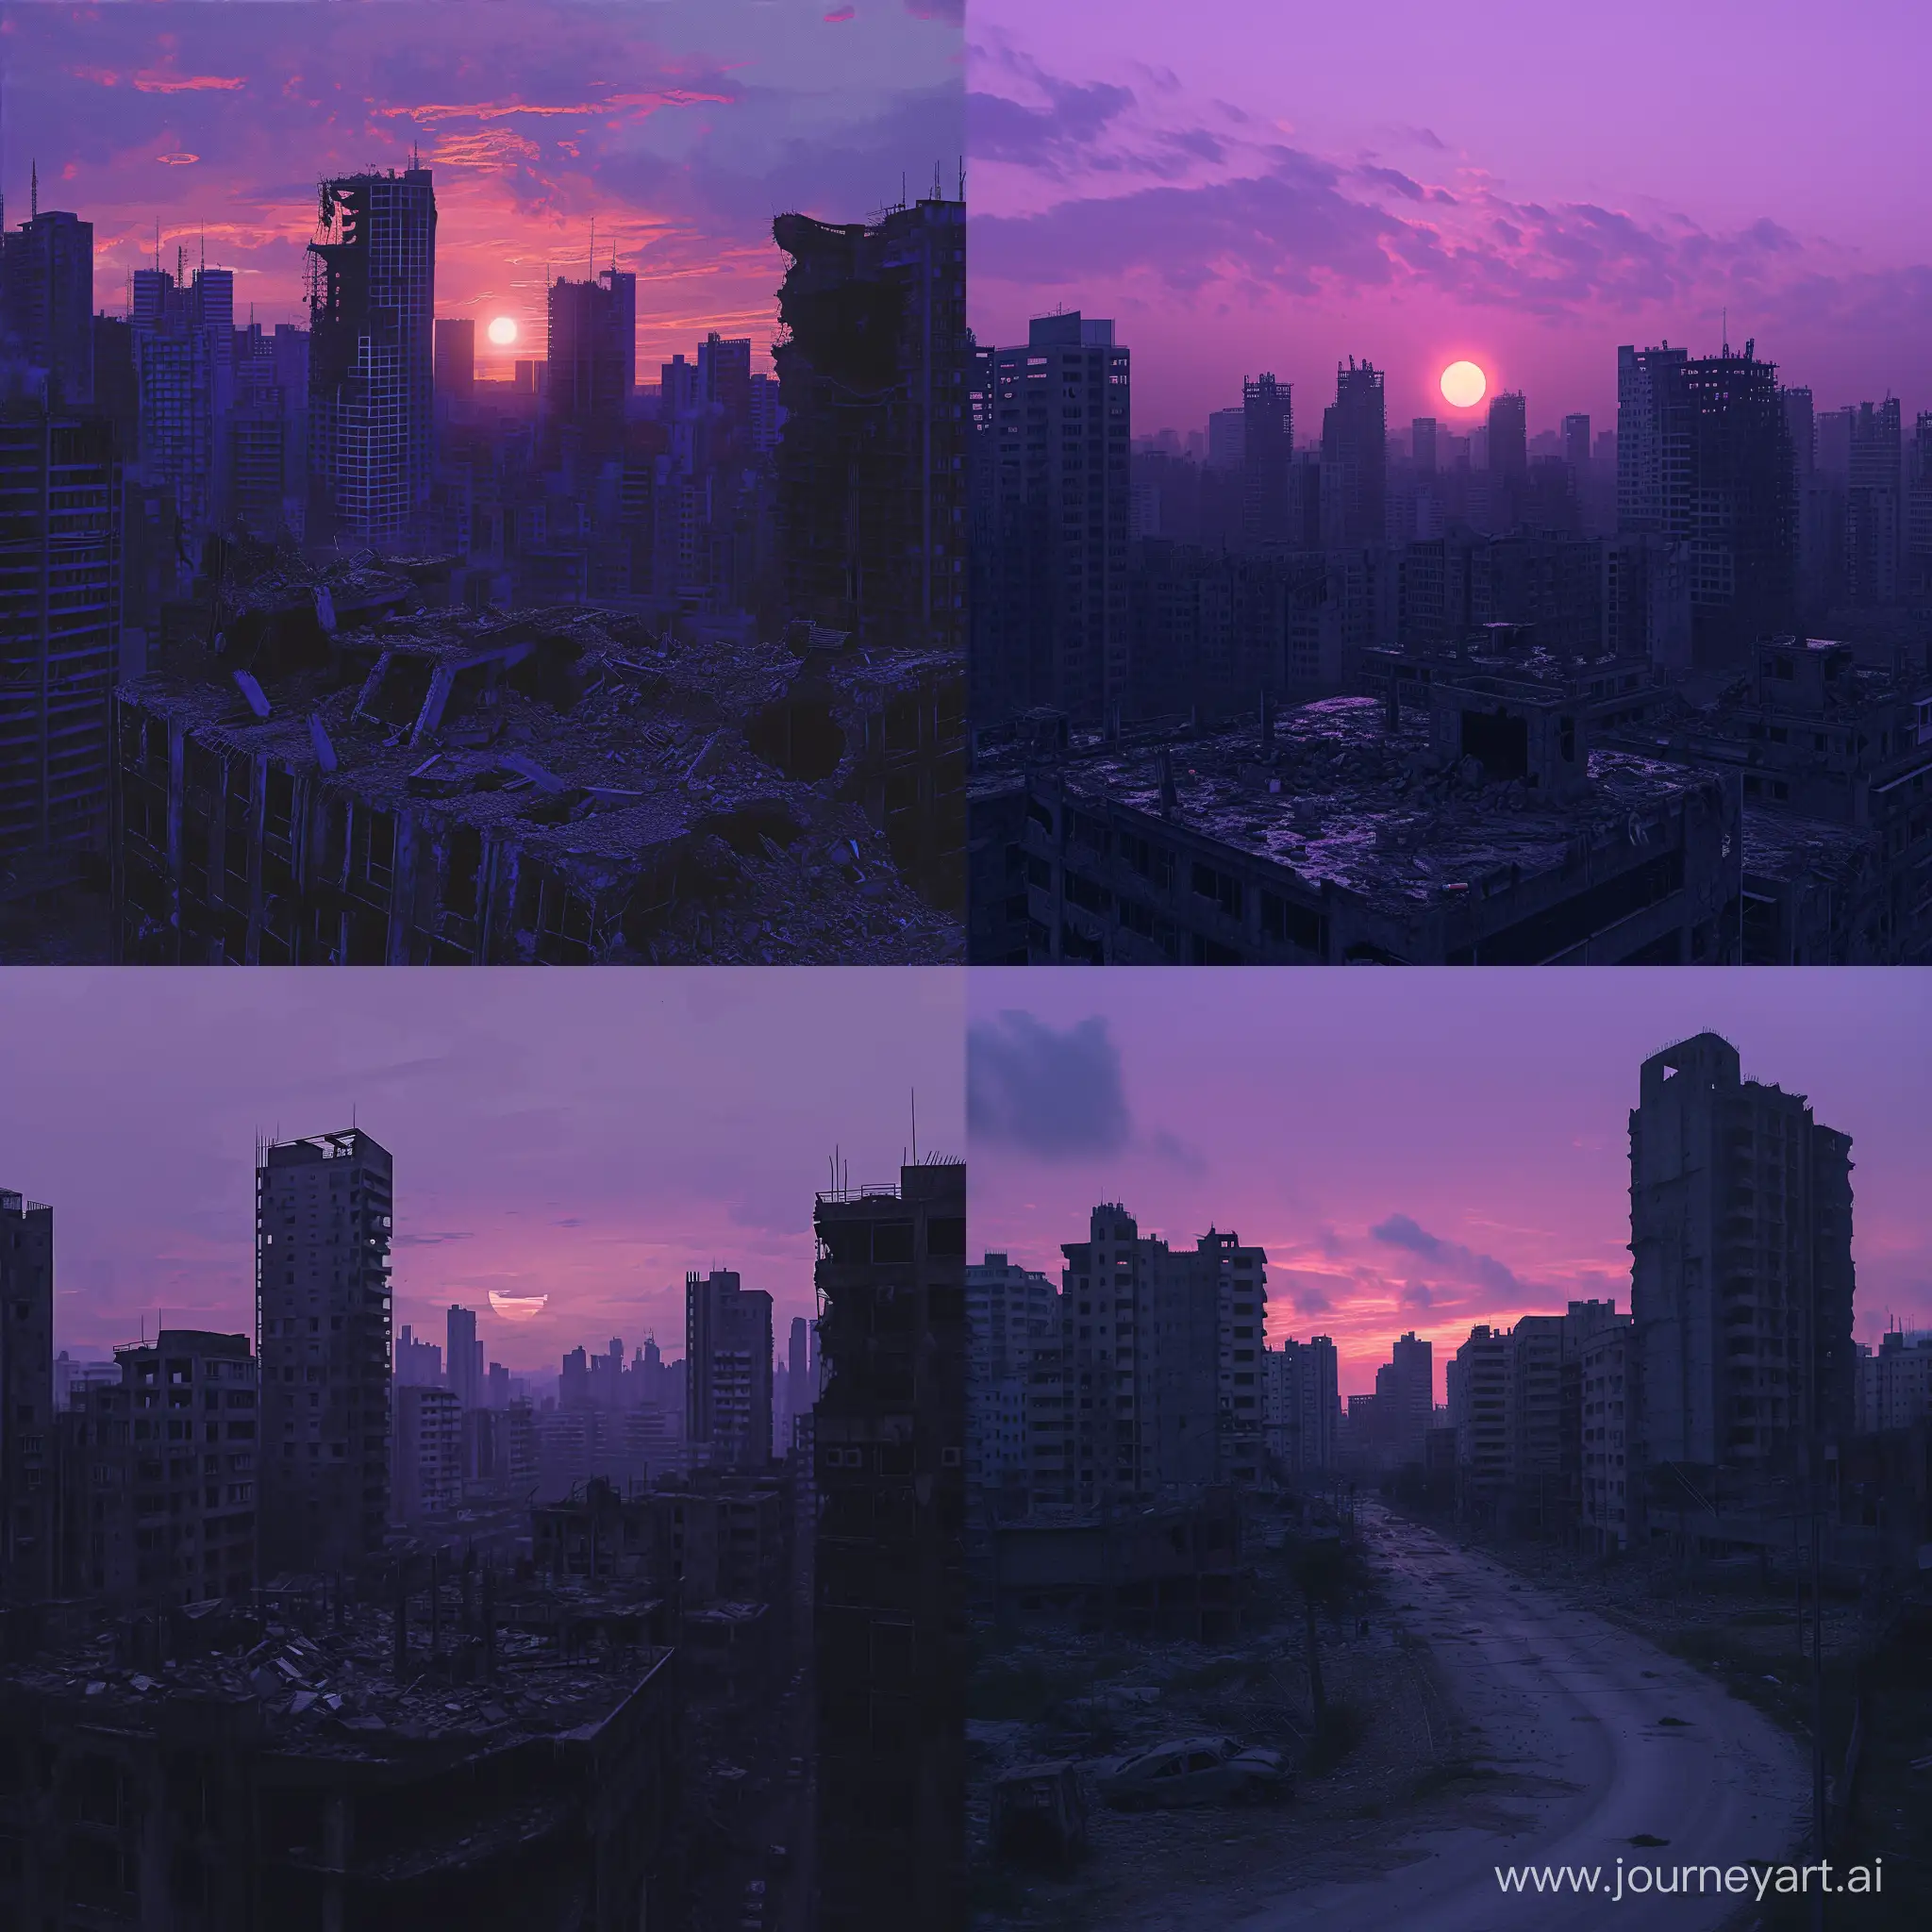 Dystopian-Urban-Landscape-at-Twilight